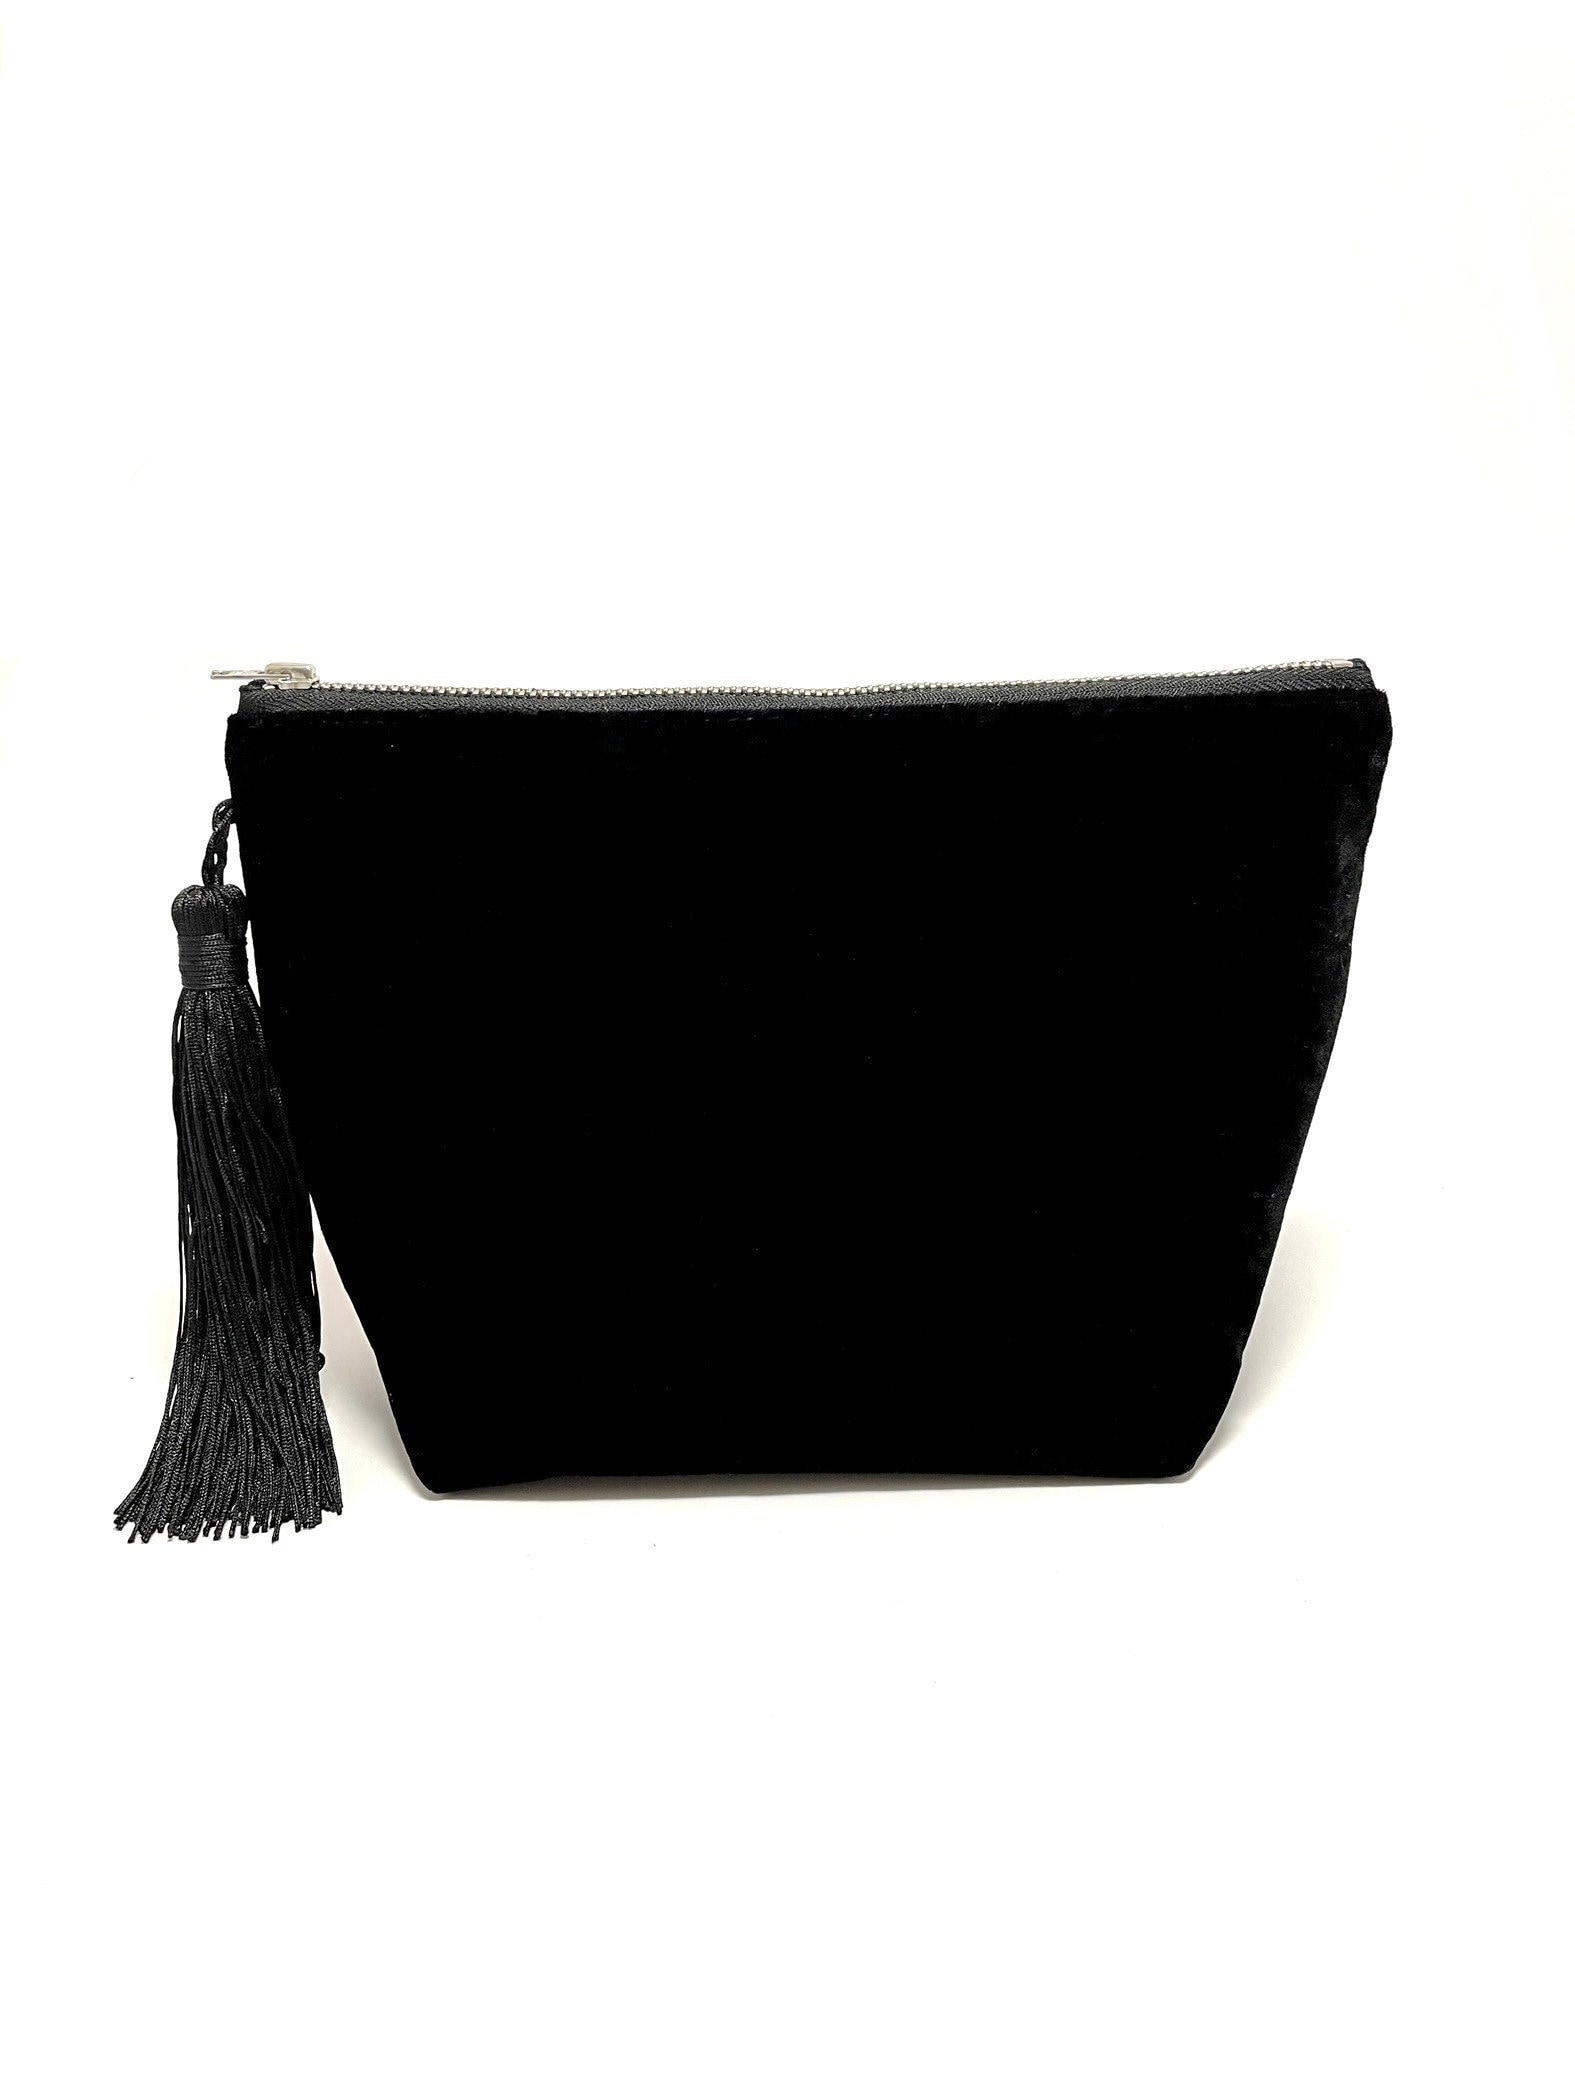 Dolce&Gabbana Women's Handbags | Neiman Marcus